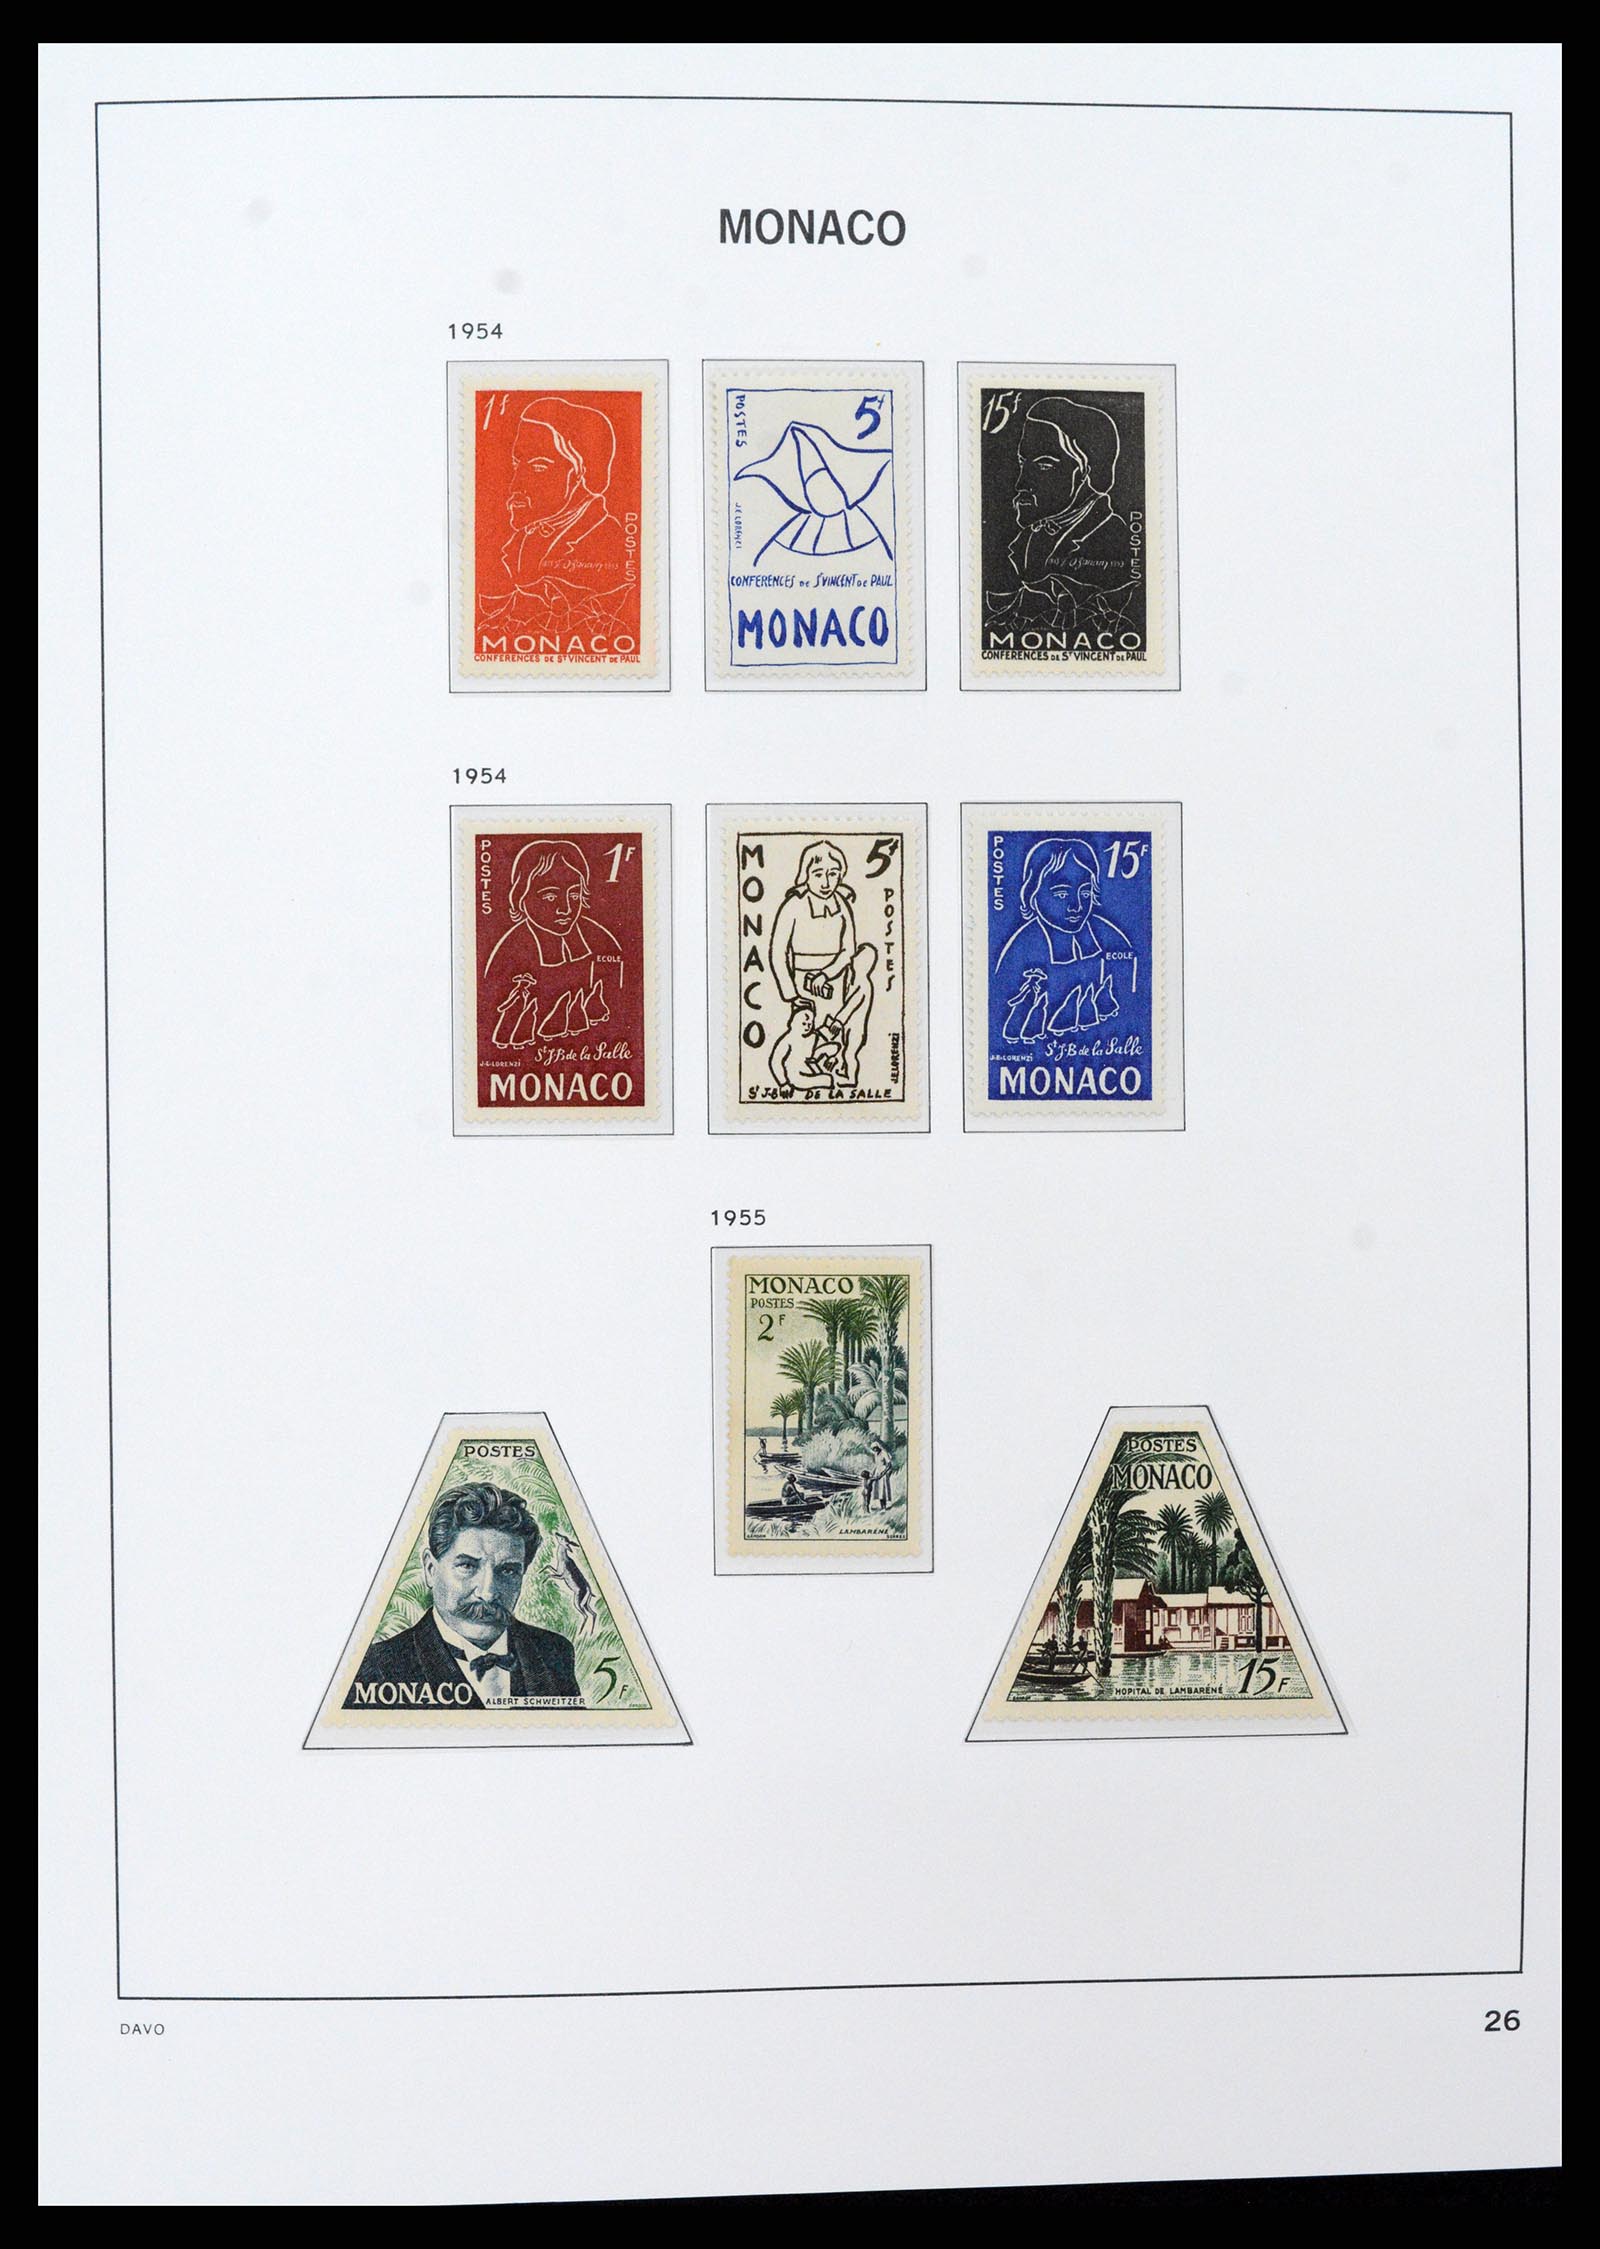 37279 026 - Stamp collection 37279 Monaco 1885-1969.